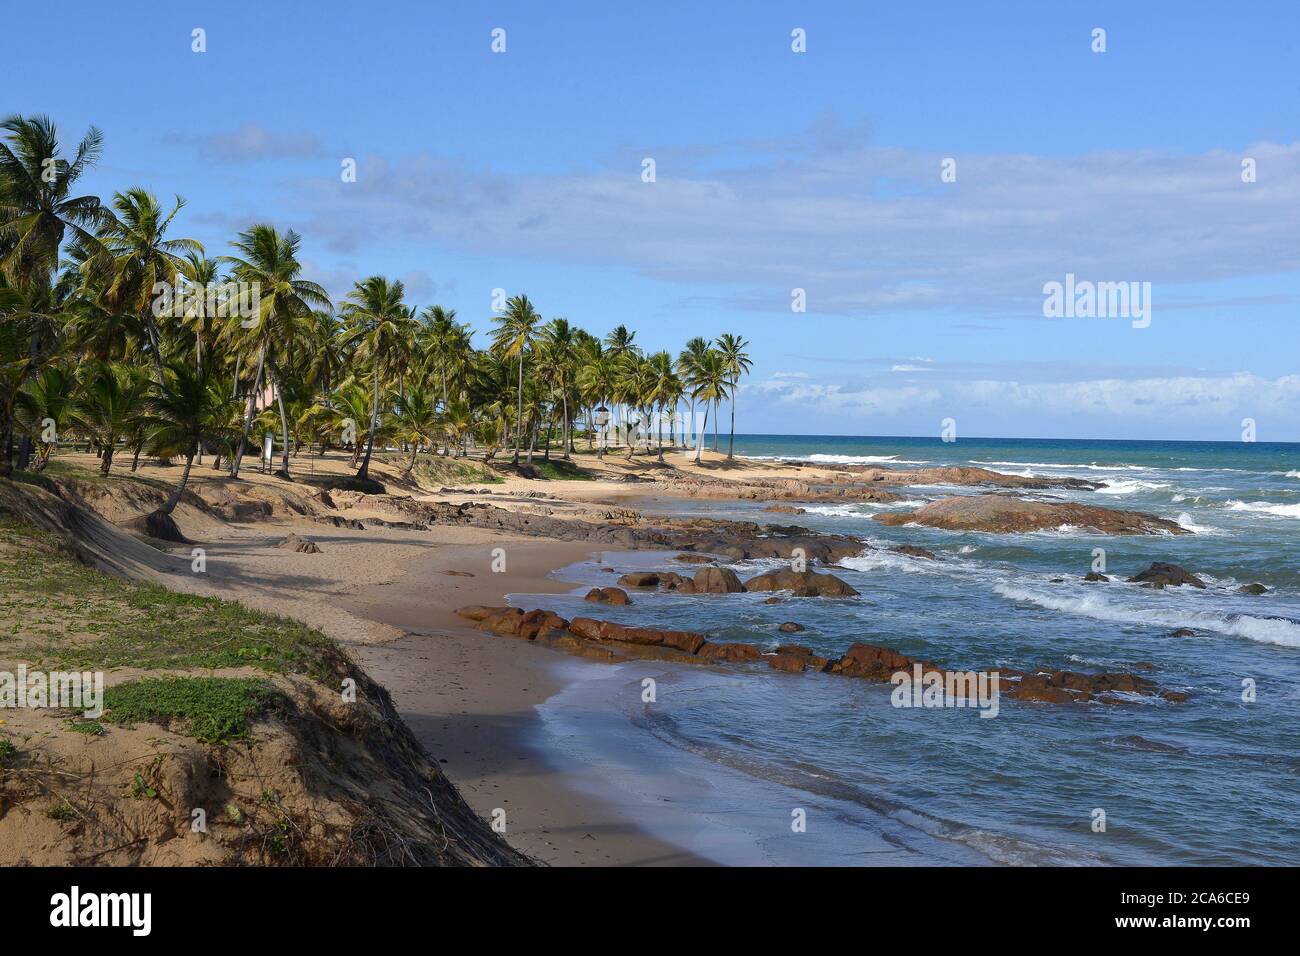 palm trees on beach in sunny day. Una, Bahia, Brazil Stock Photo